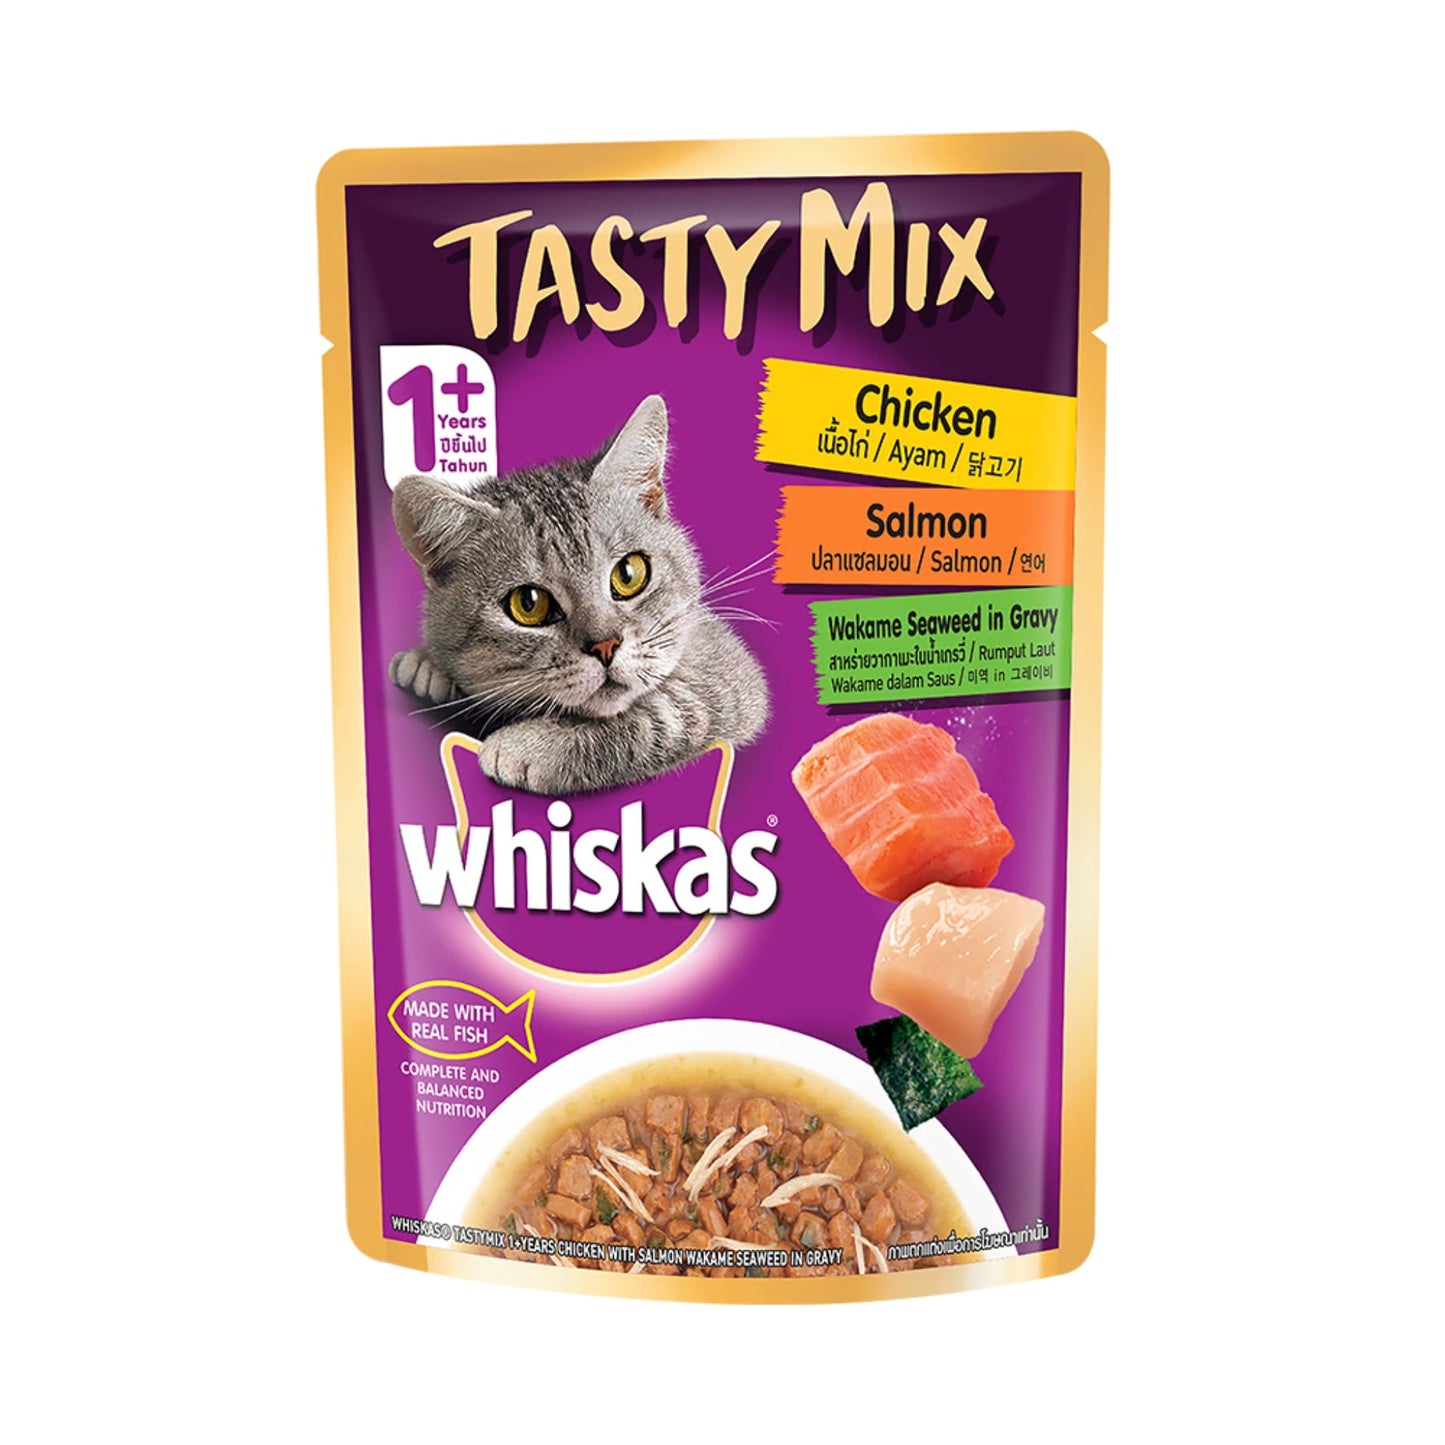 Whiskas Adult Cat Tasty Mix Chicken Salmon in Gravy - 70g, Pack of 6